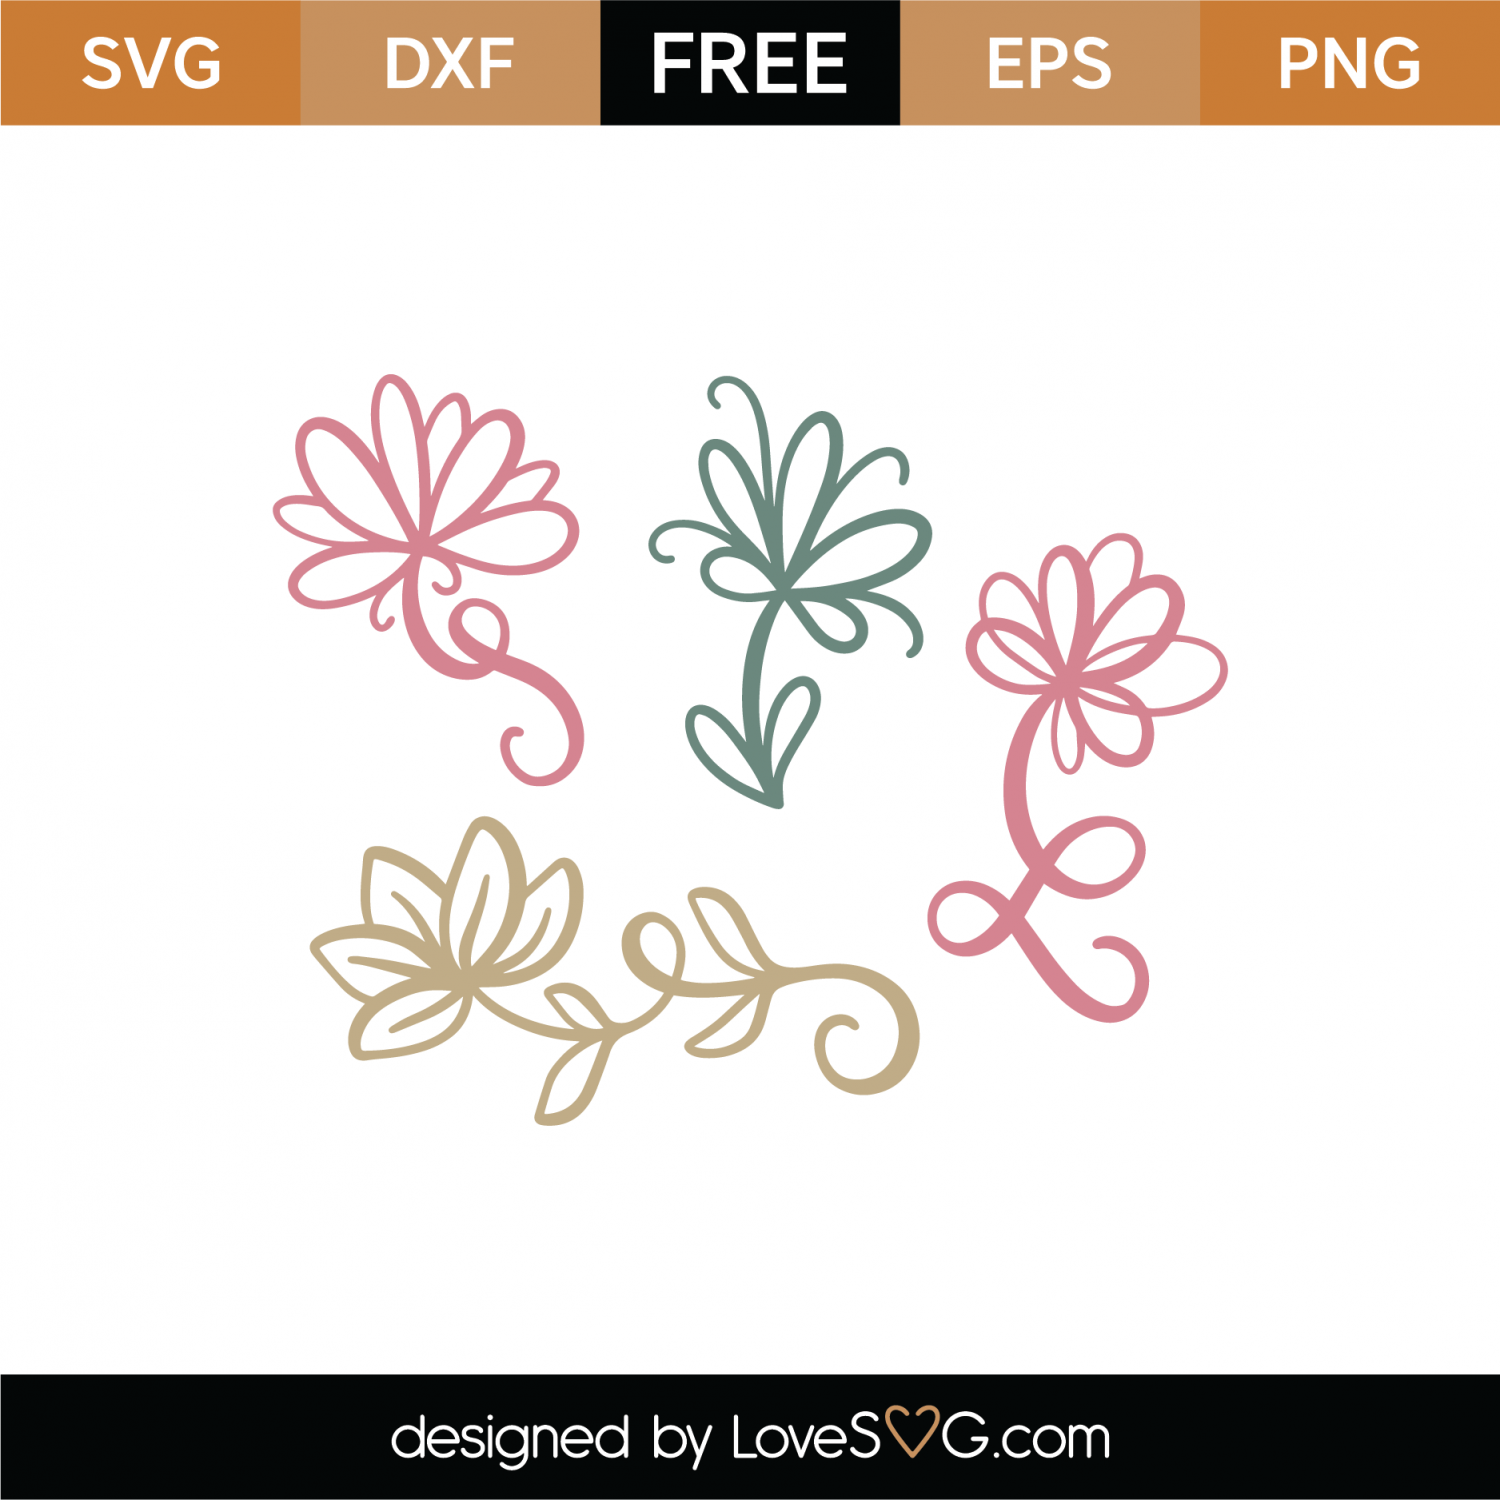 Download Free Flowers SVG Cut File | Lovesvg.com